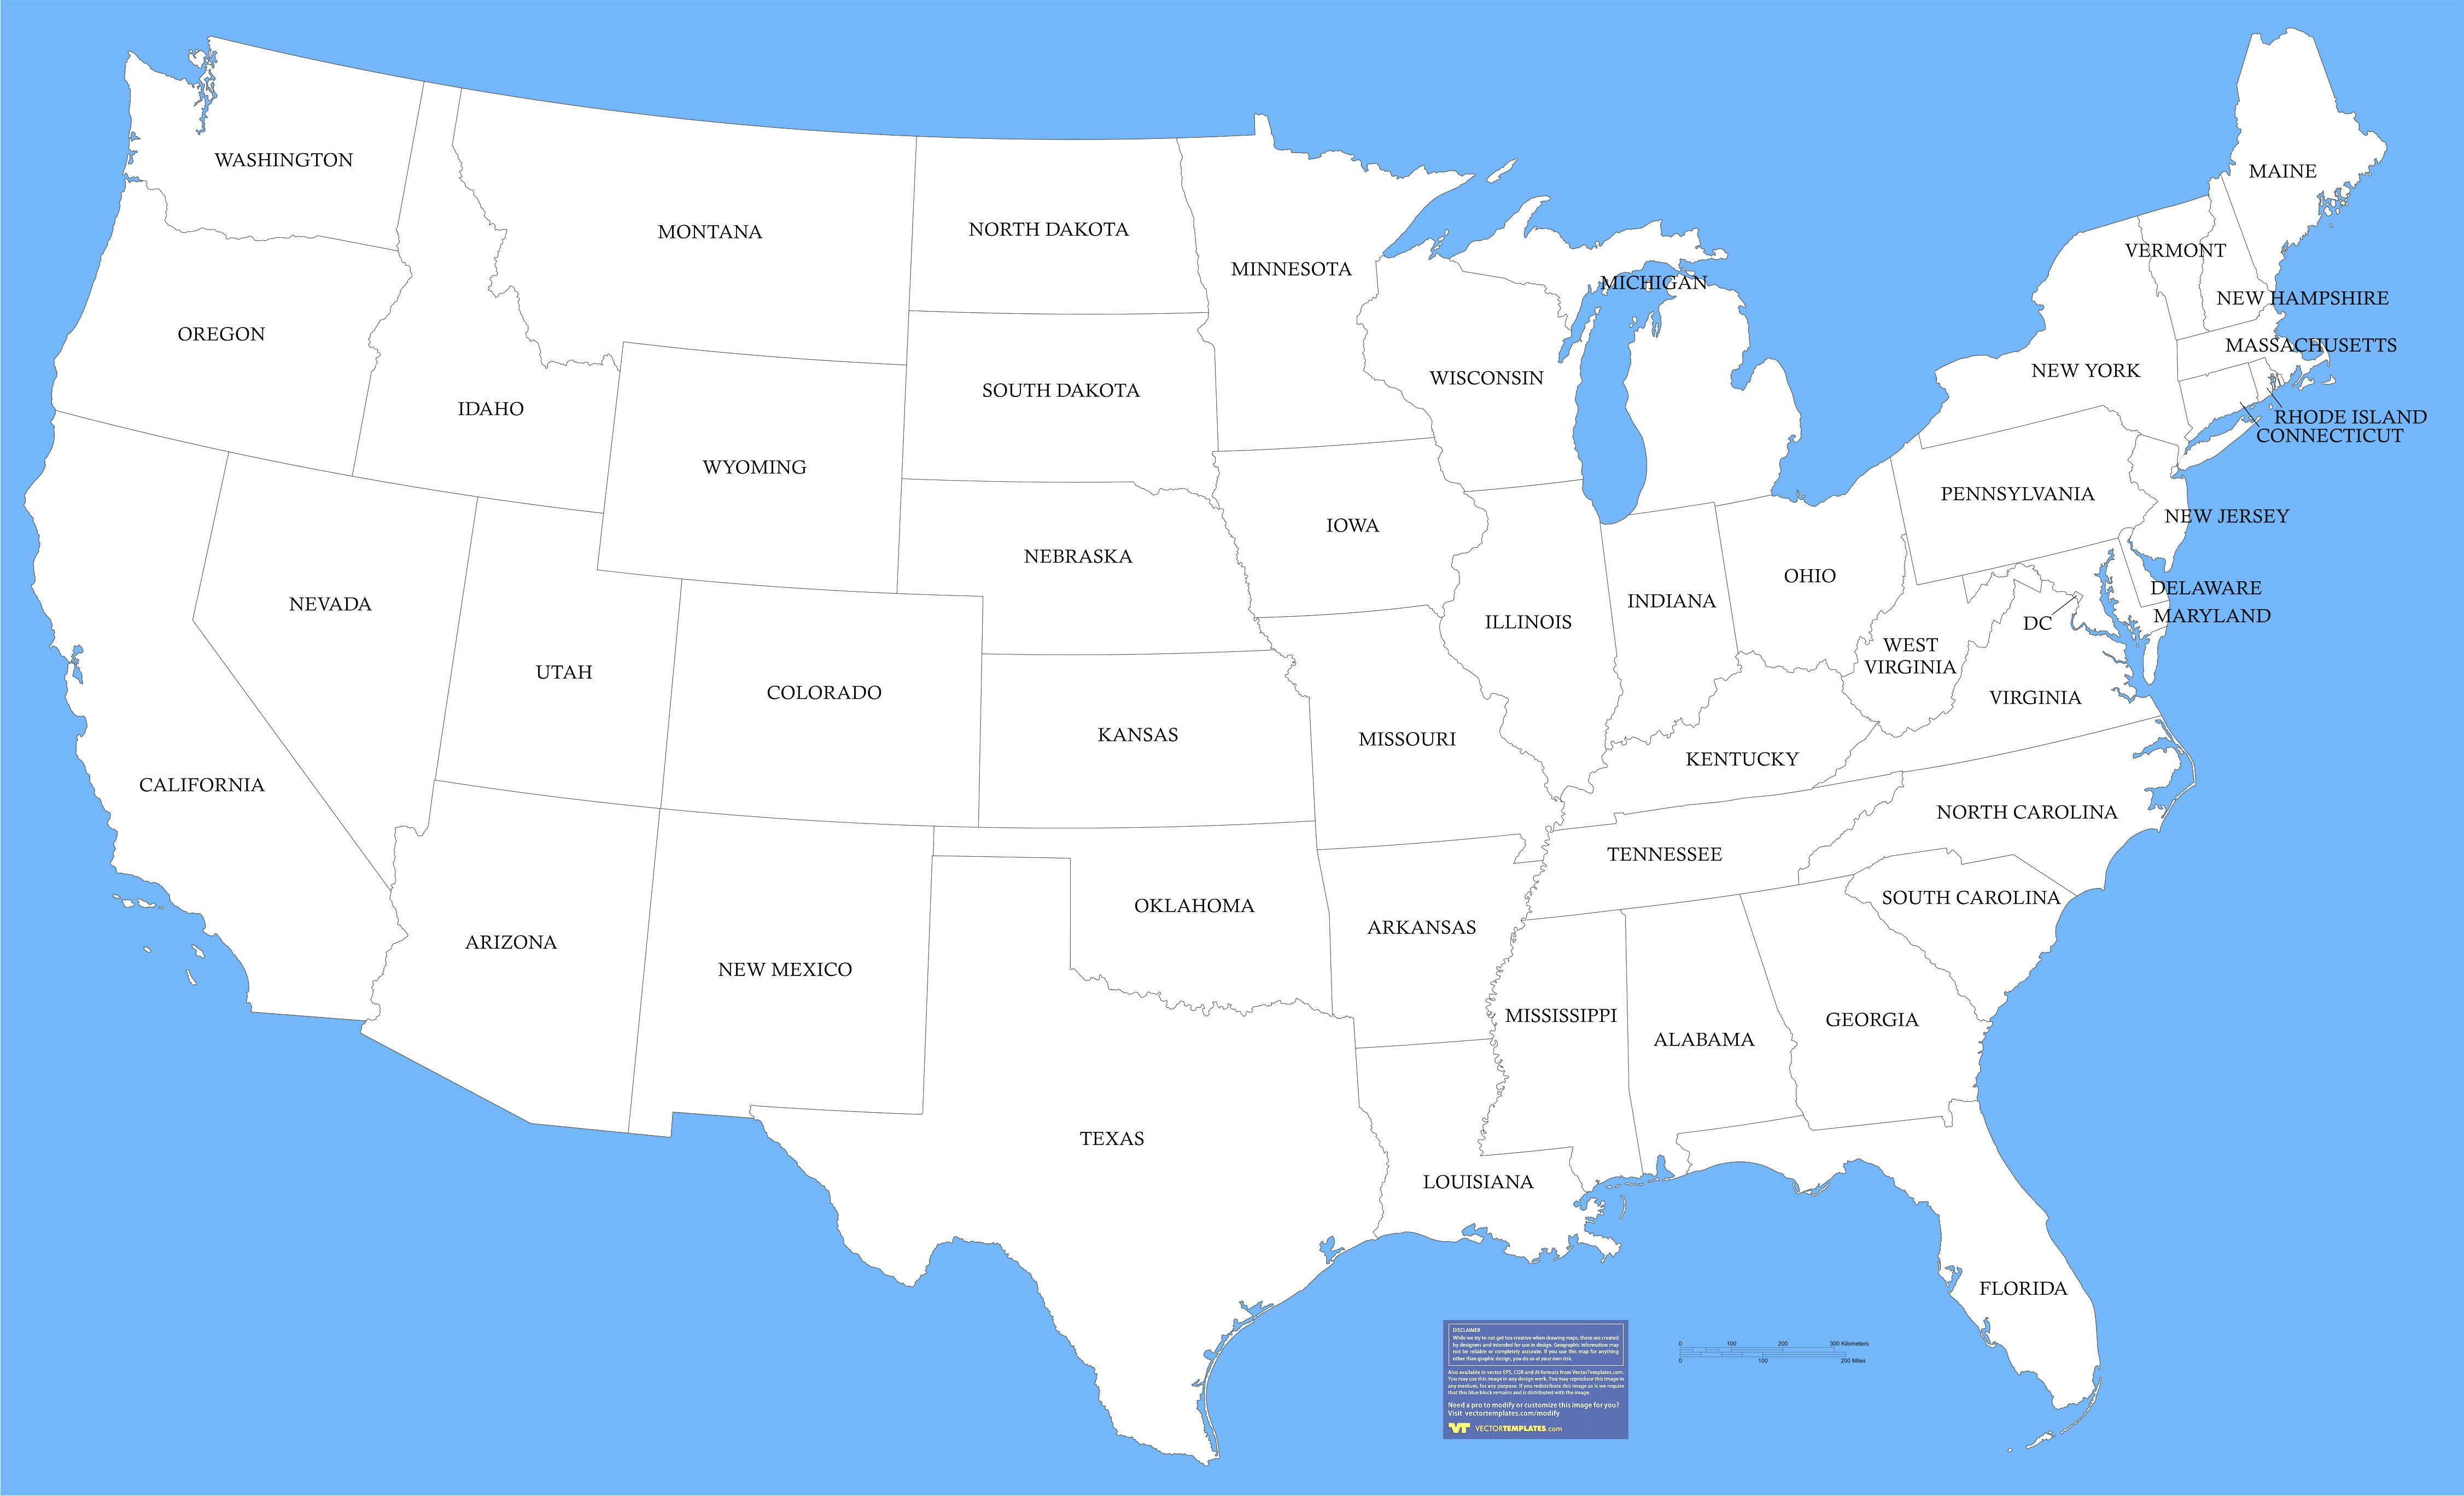 Basic Printable Map Of The United States Lovely United States Regions Map Printable Best Northeast United States